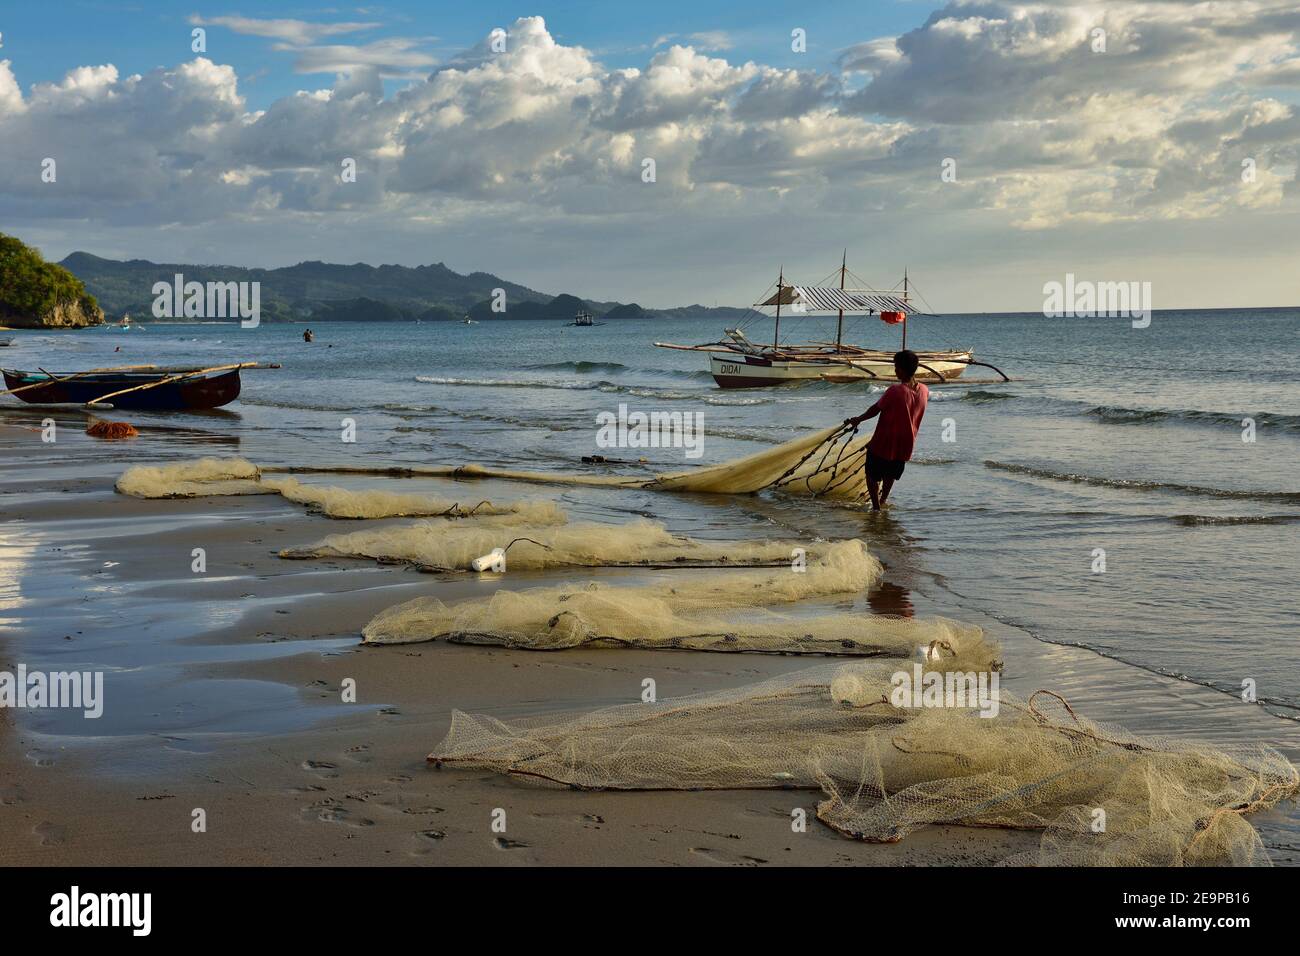 Filipino Fishermen is fishing on the shore in the Philippines Stock Photo